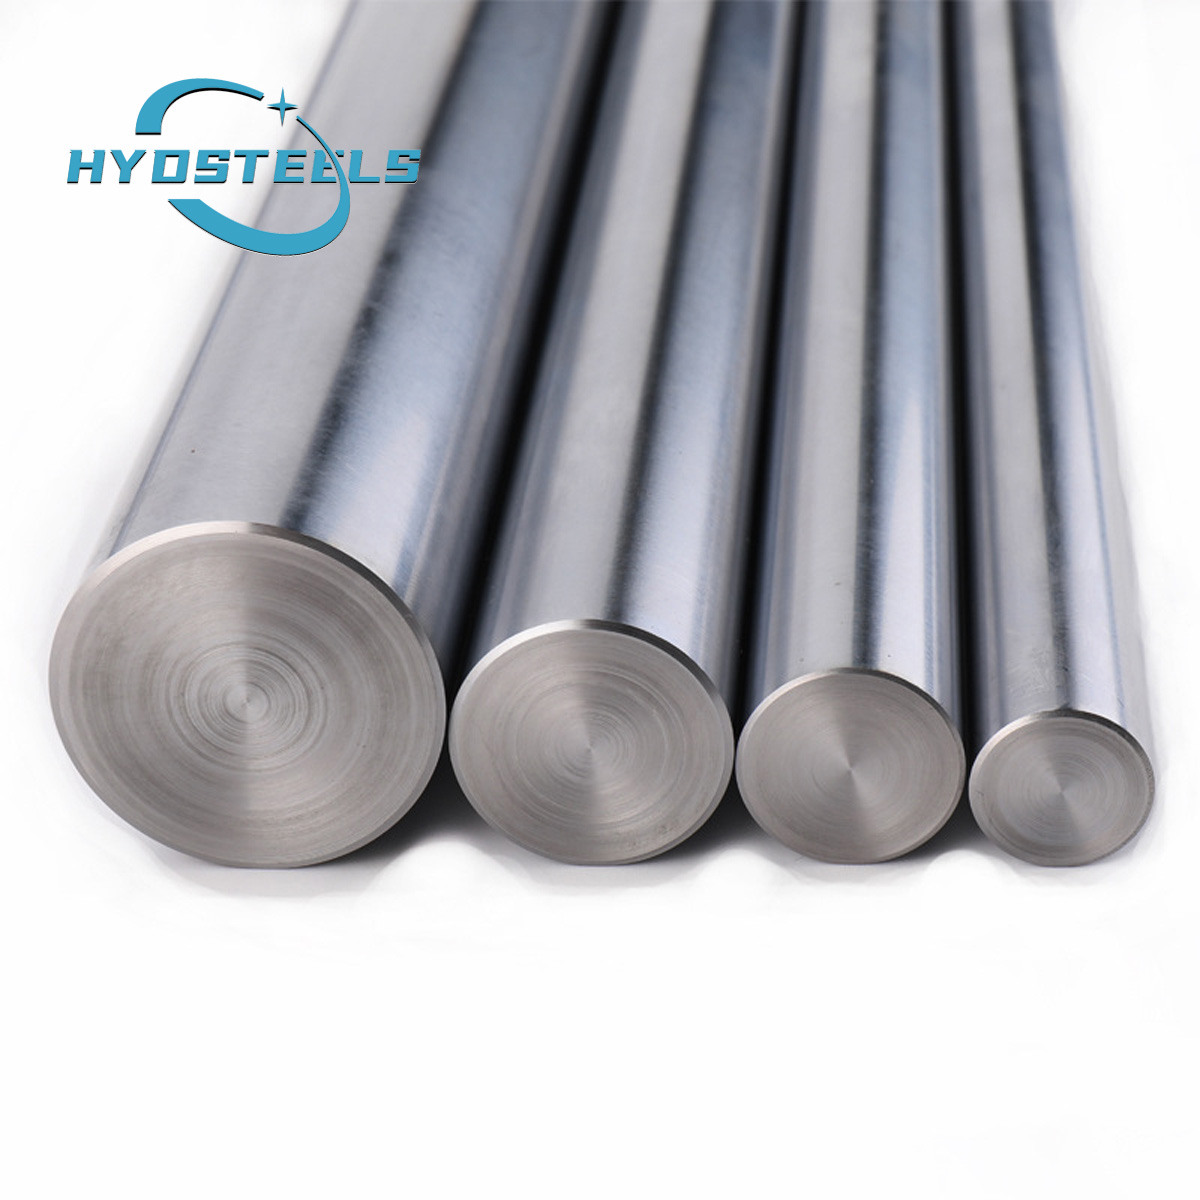 High quatity hard chrome plated rod for hydraulic cylinder